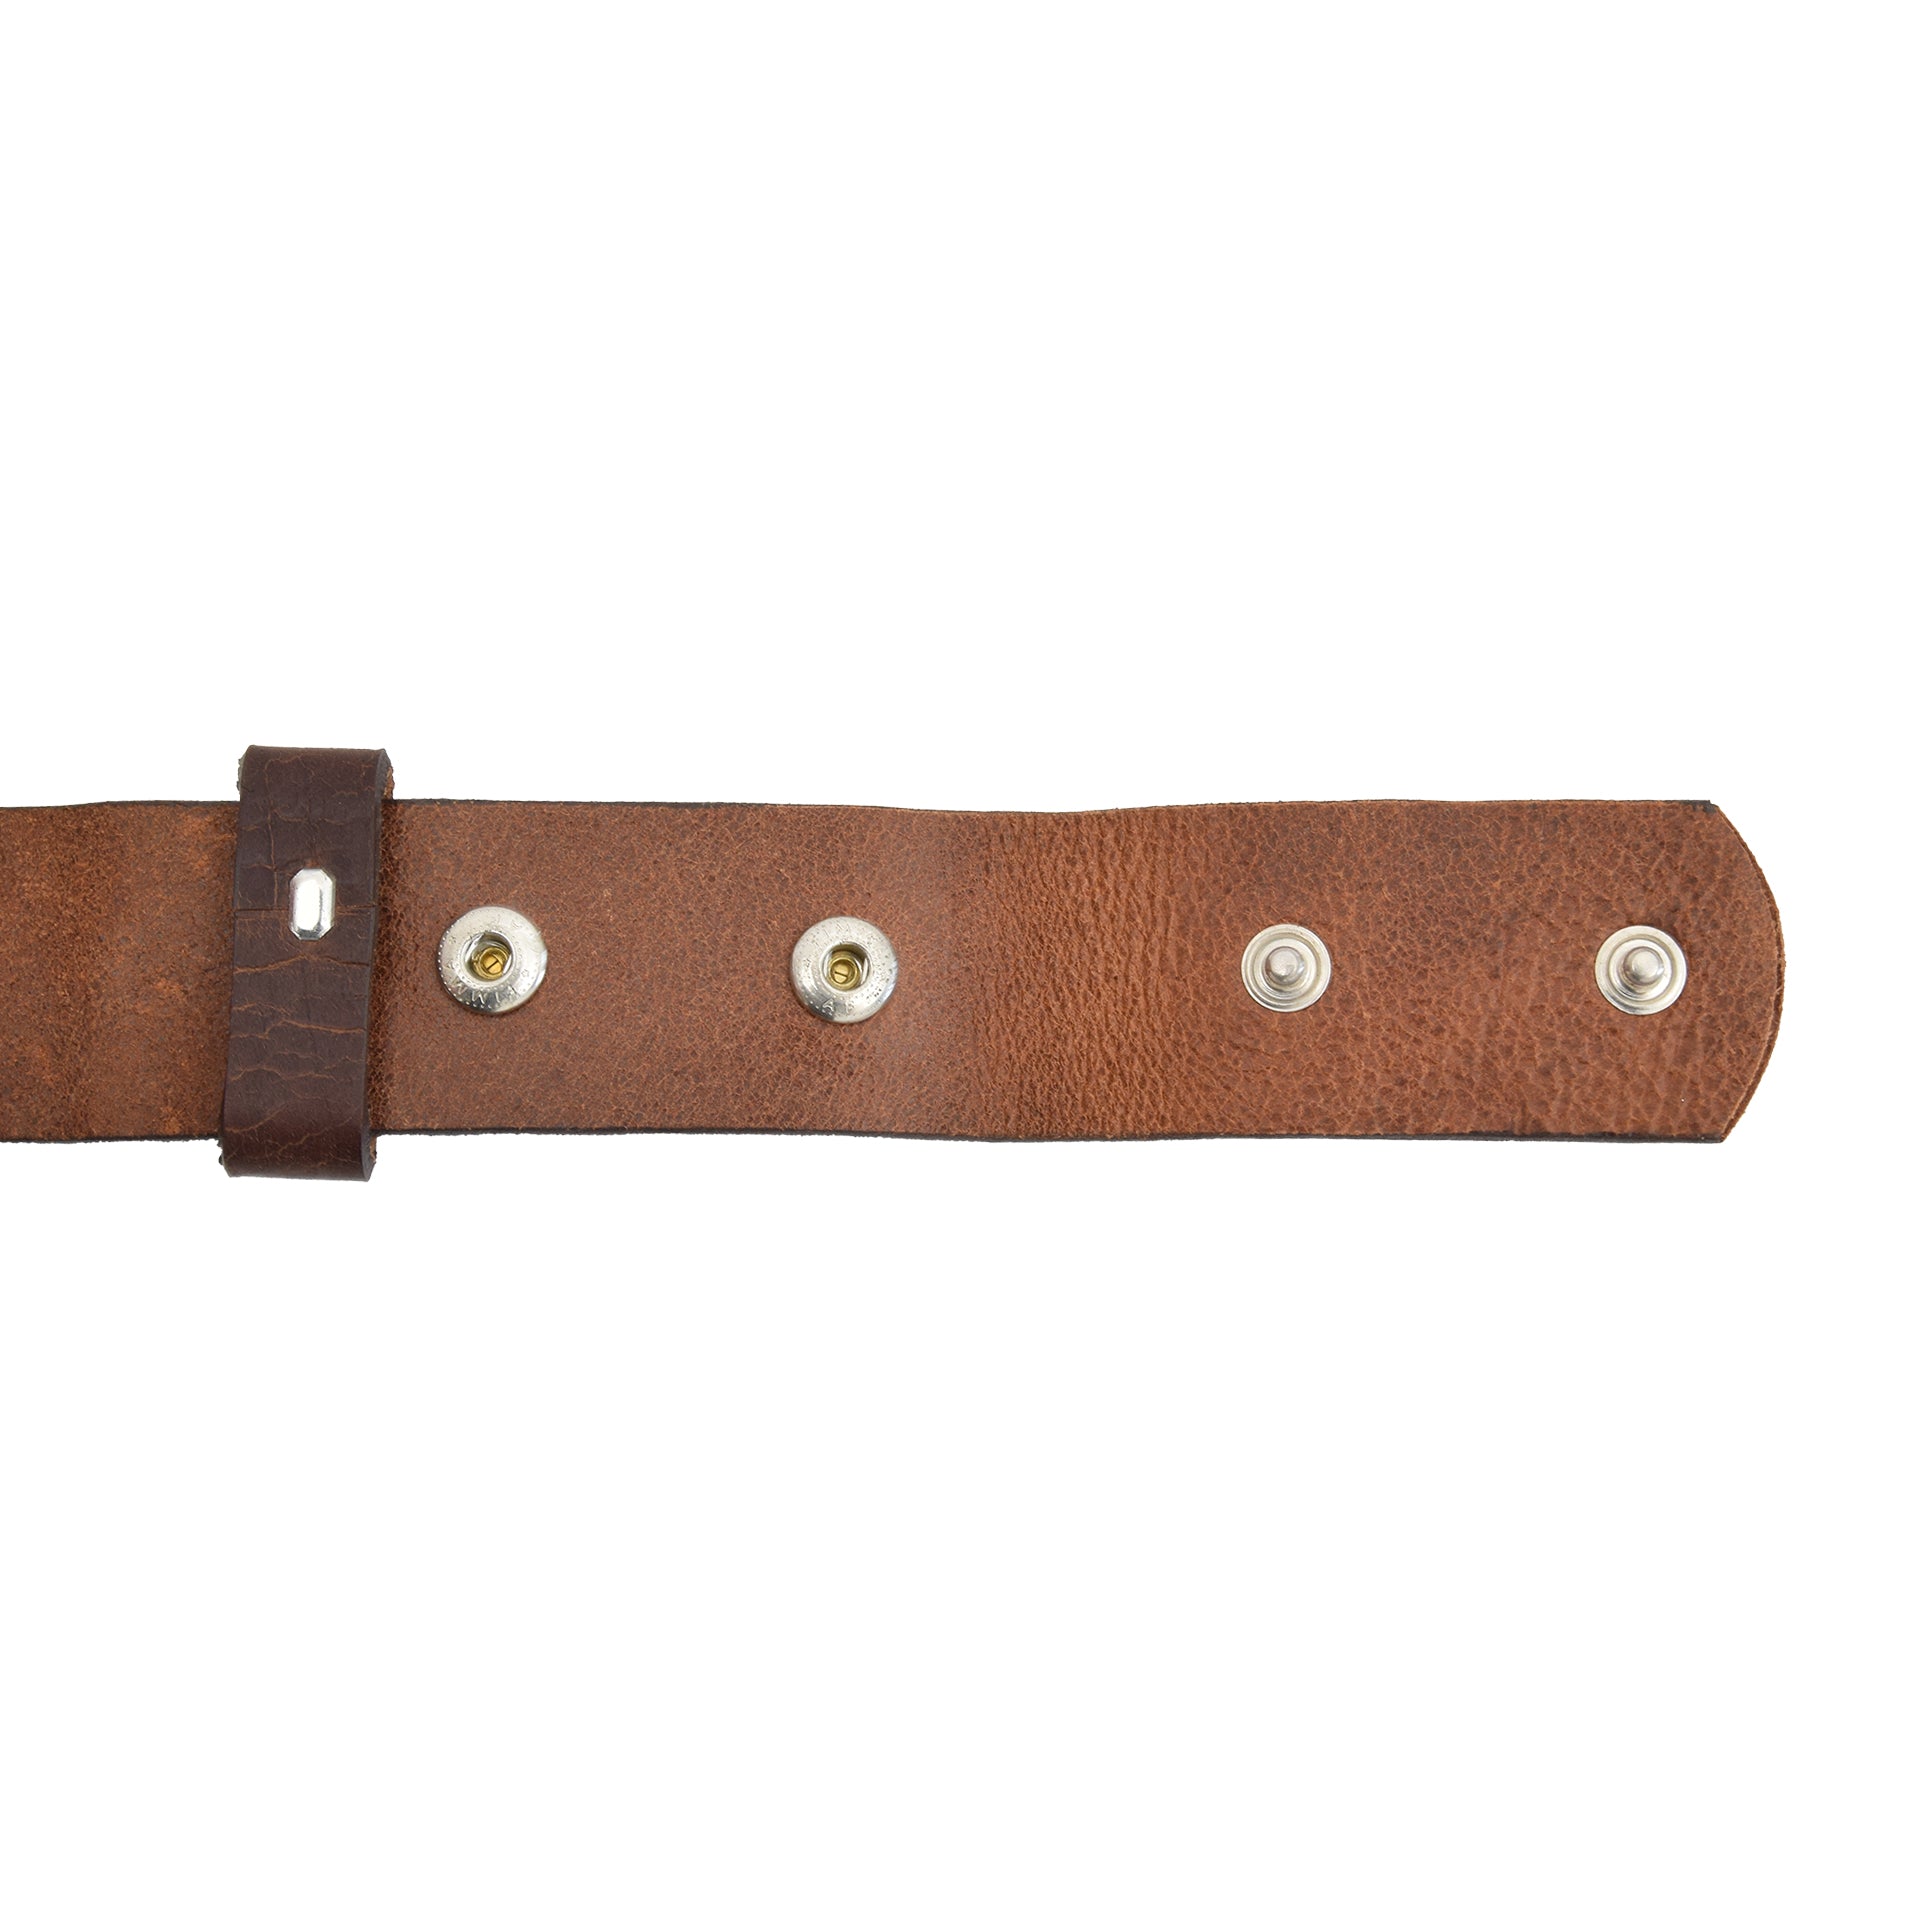 Viva Leather Belt Brown with Changeable Buckle - Belts Zengoda Shop online from Artisan Brands